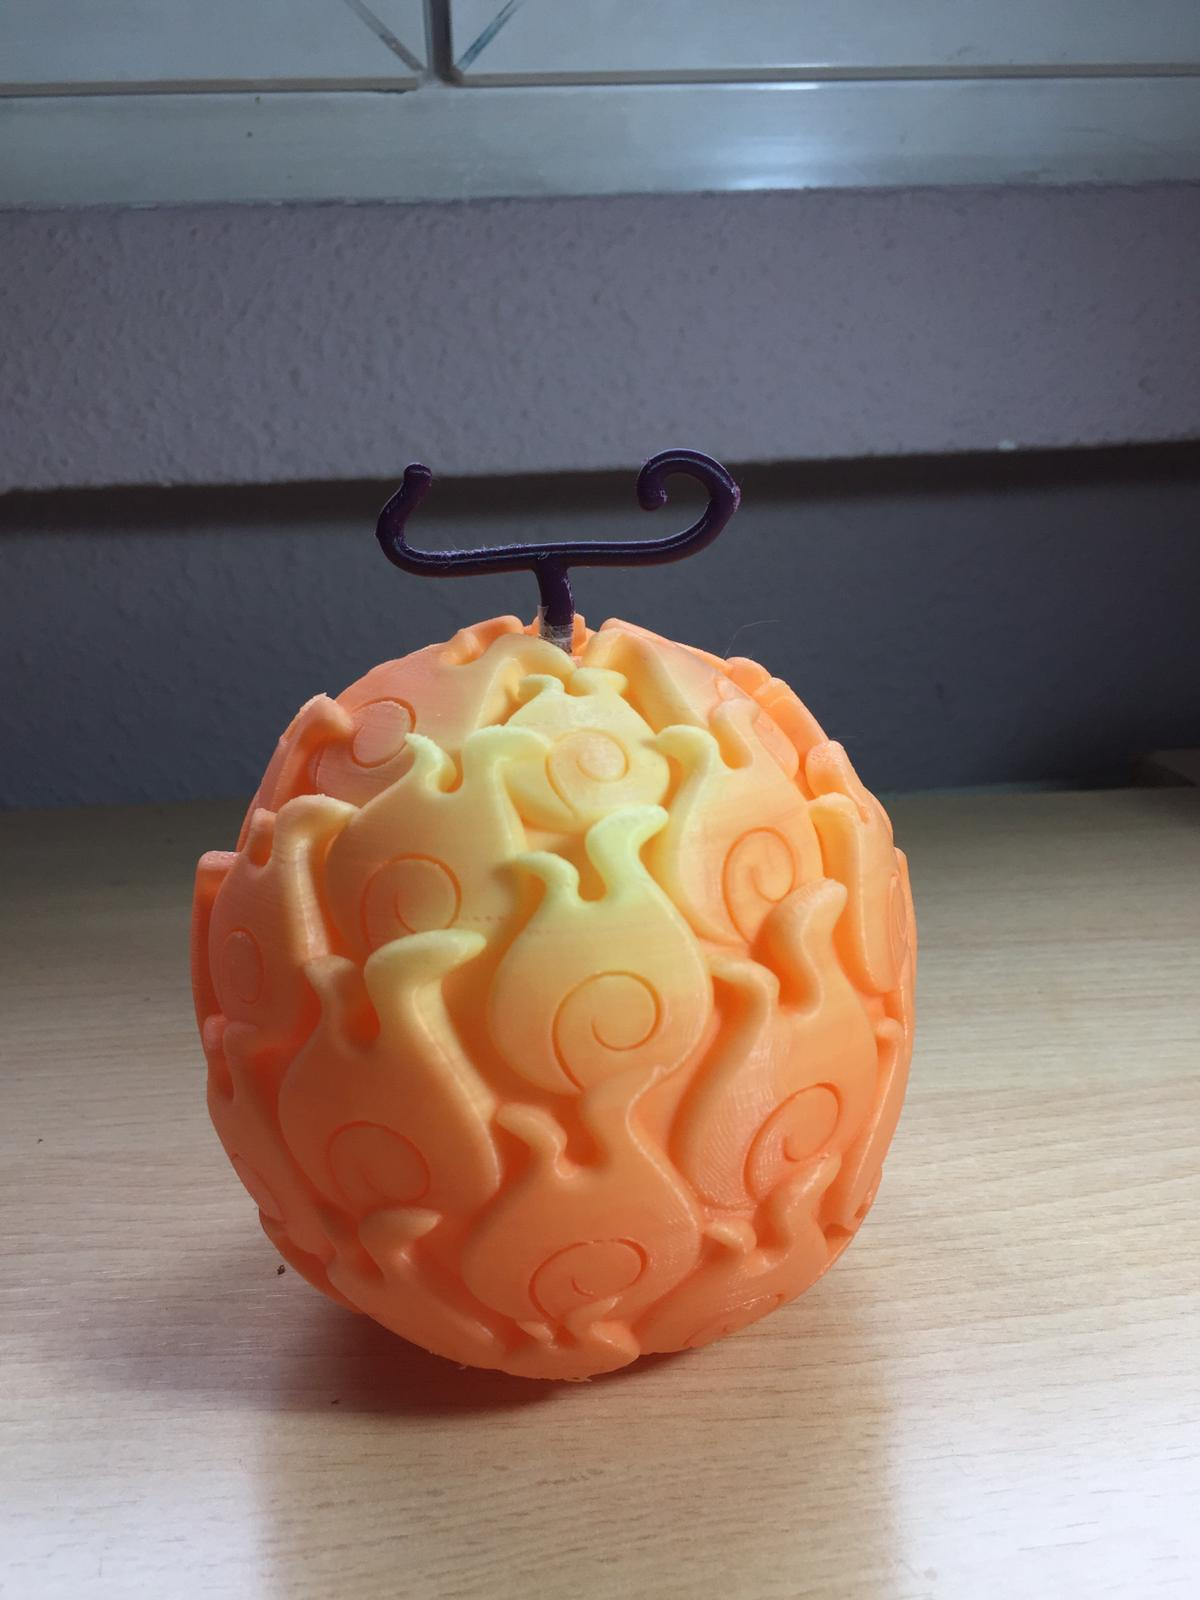 kilo kilo fruit 3D Models to Print - yeggi